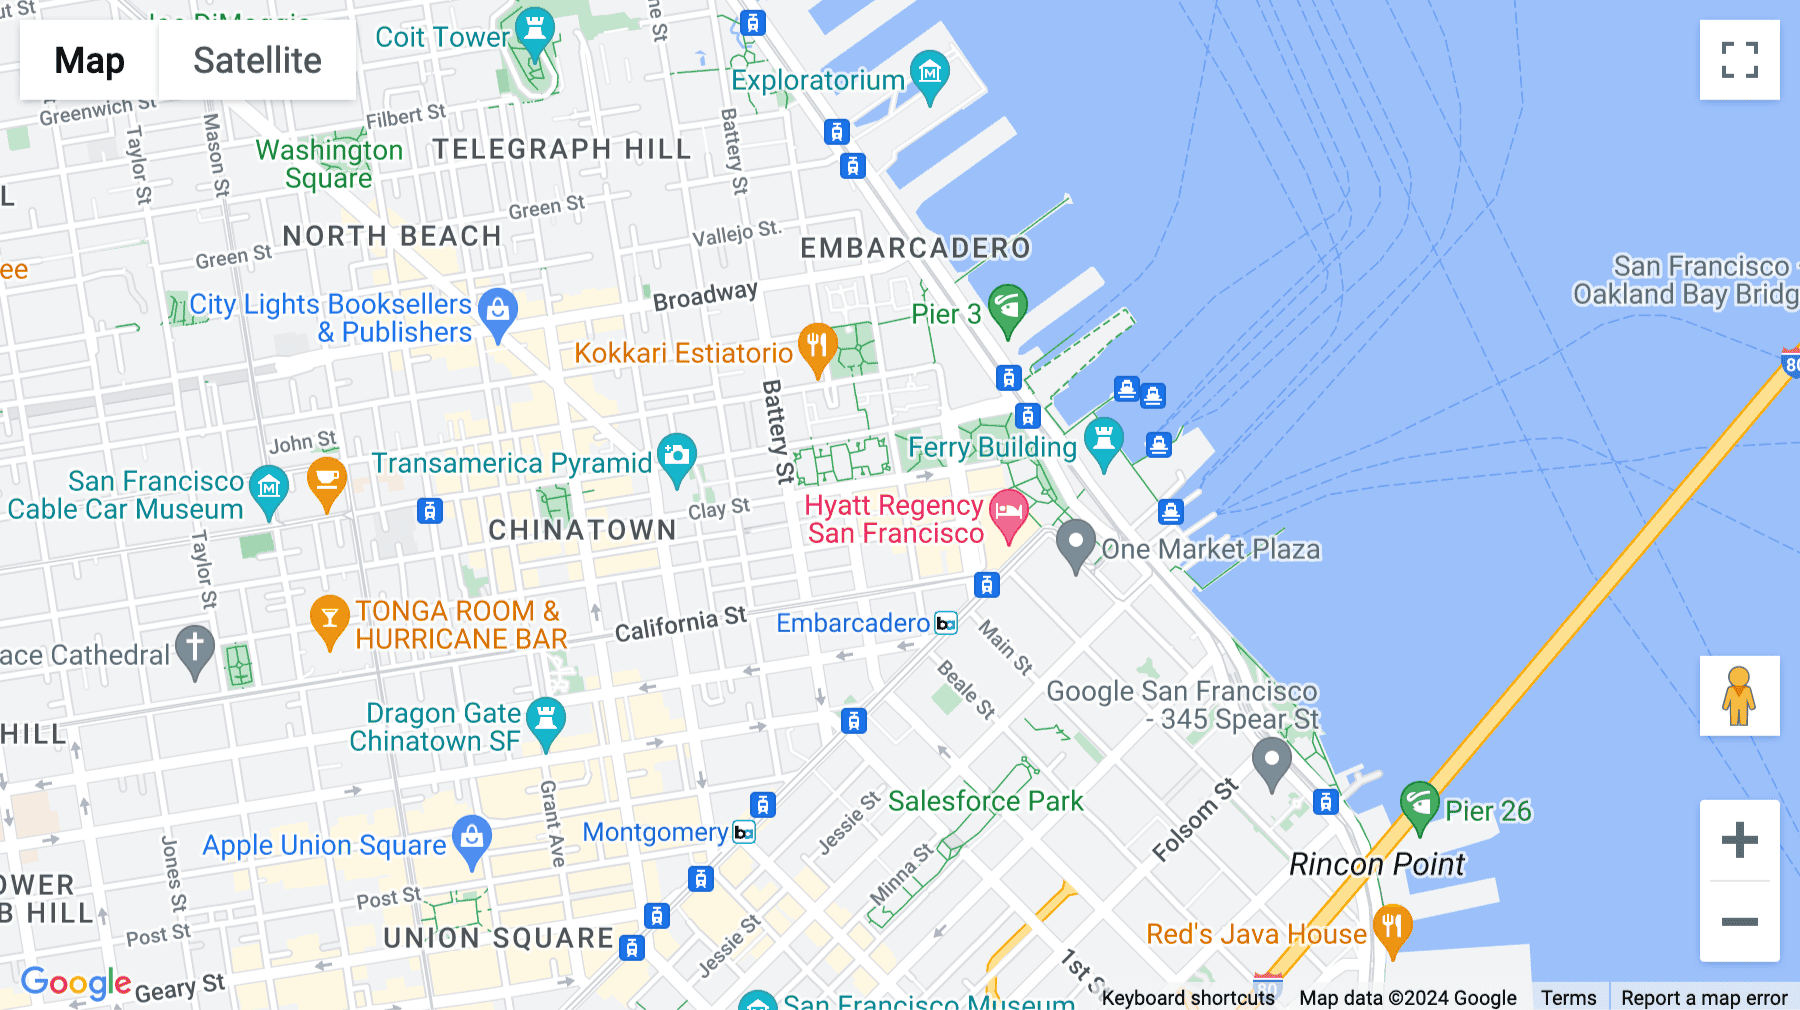 Click for interative map of 2 Embarcadero Center, San Francisco